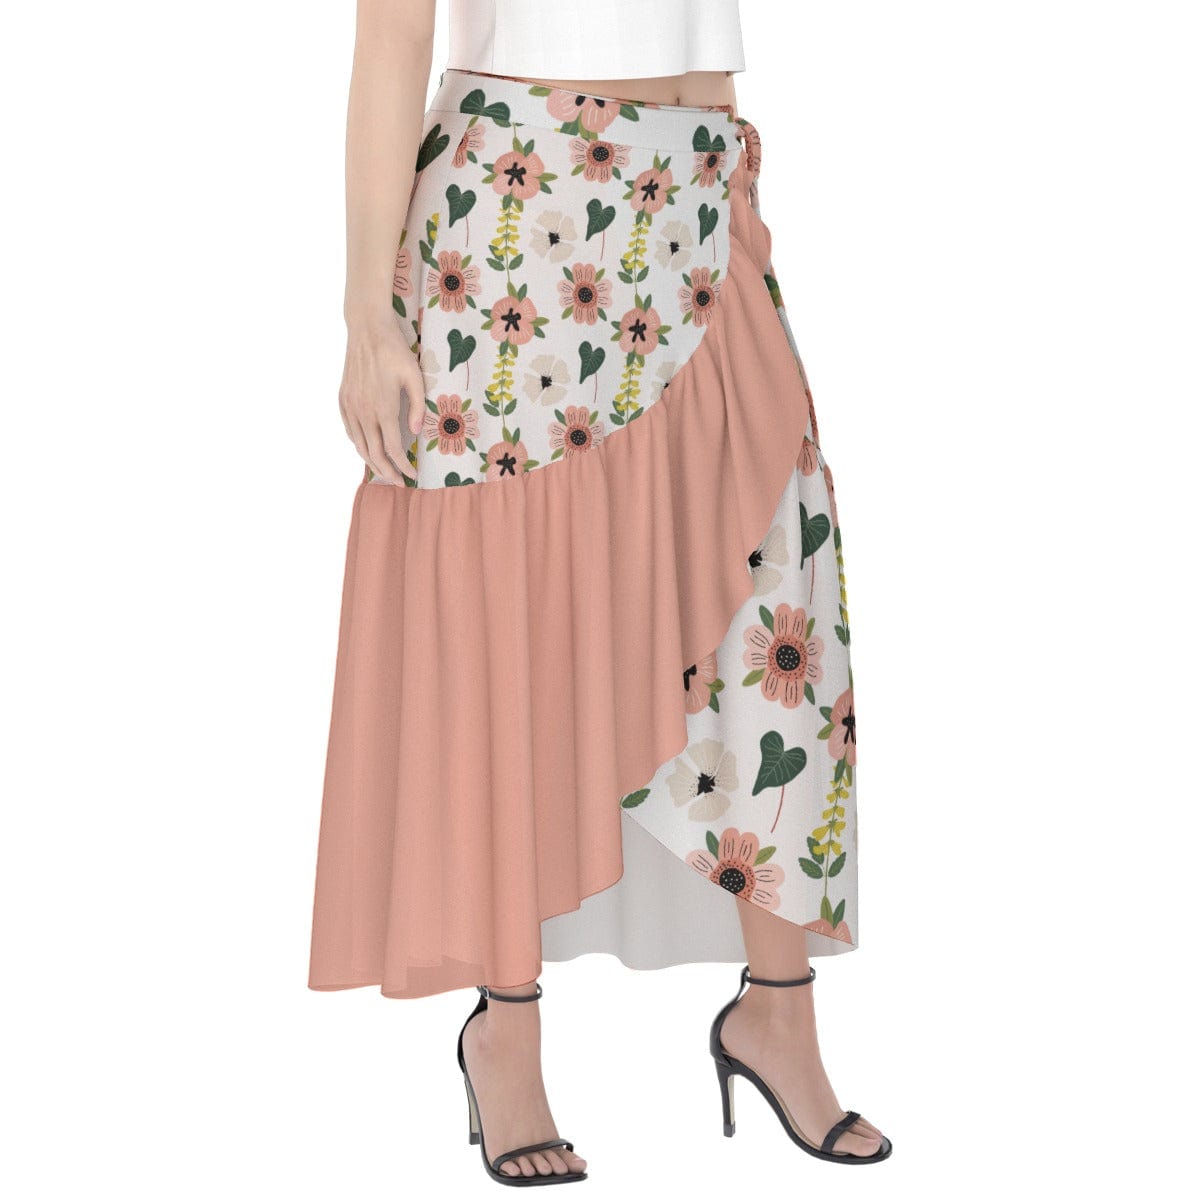 Yoycol Skirt Coral Floral -  Women's Wrap Skirt